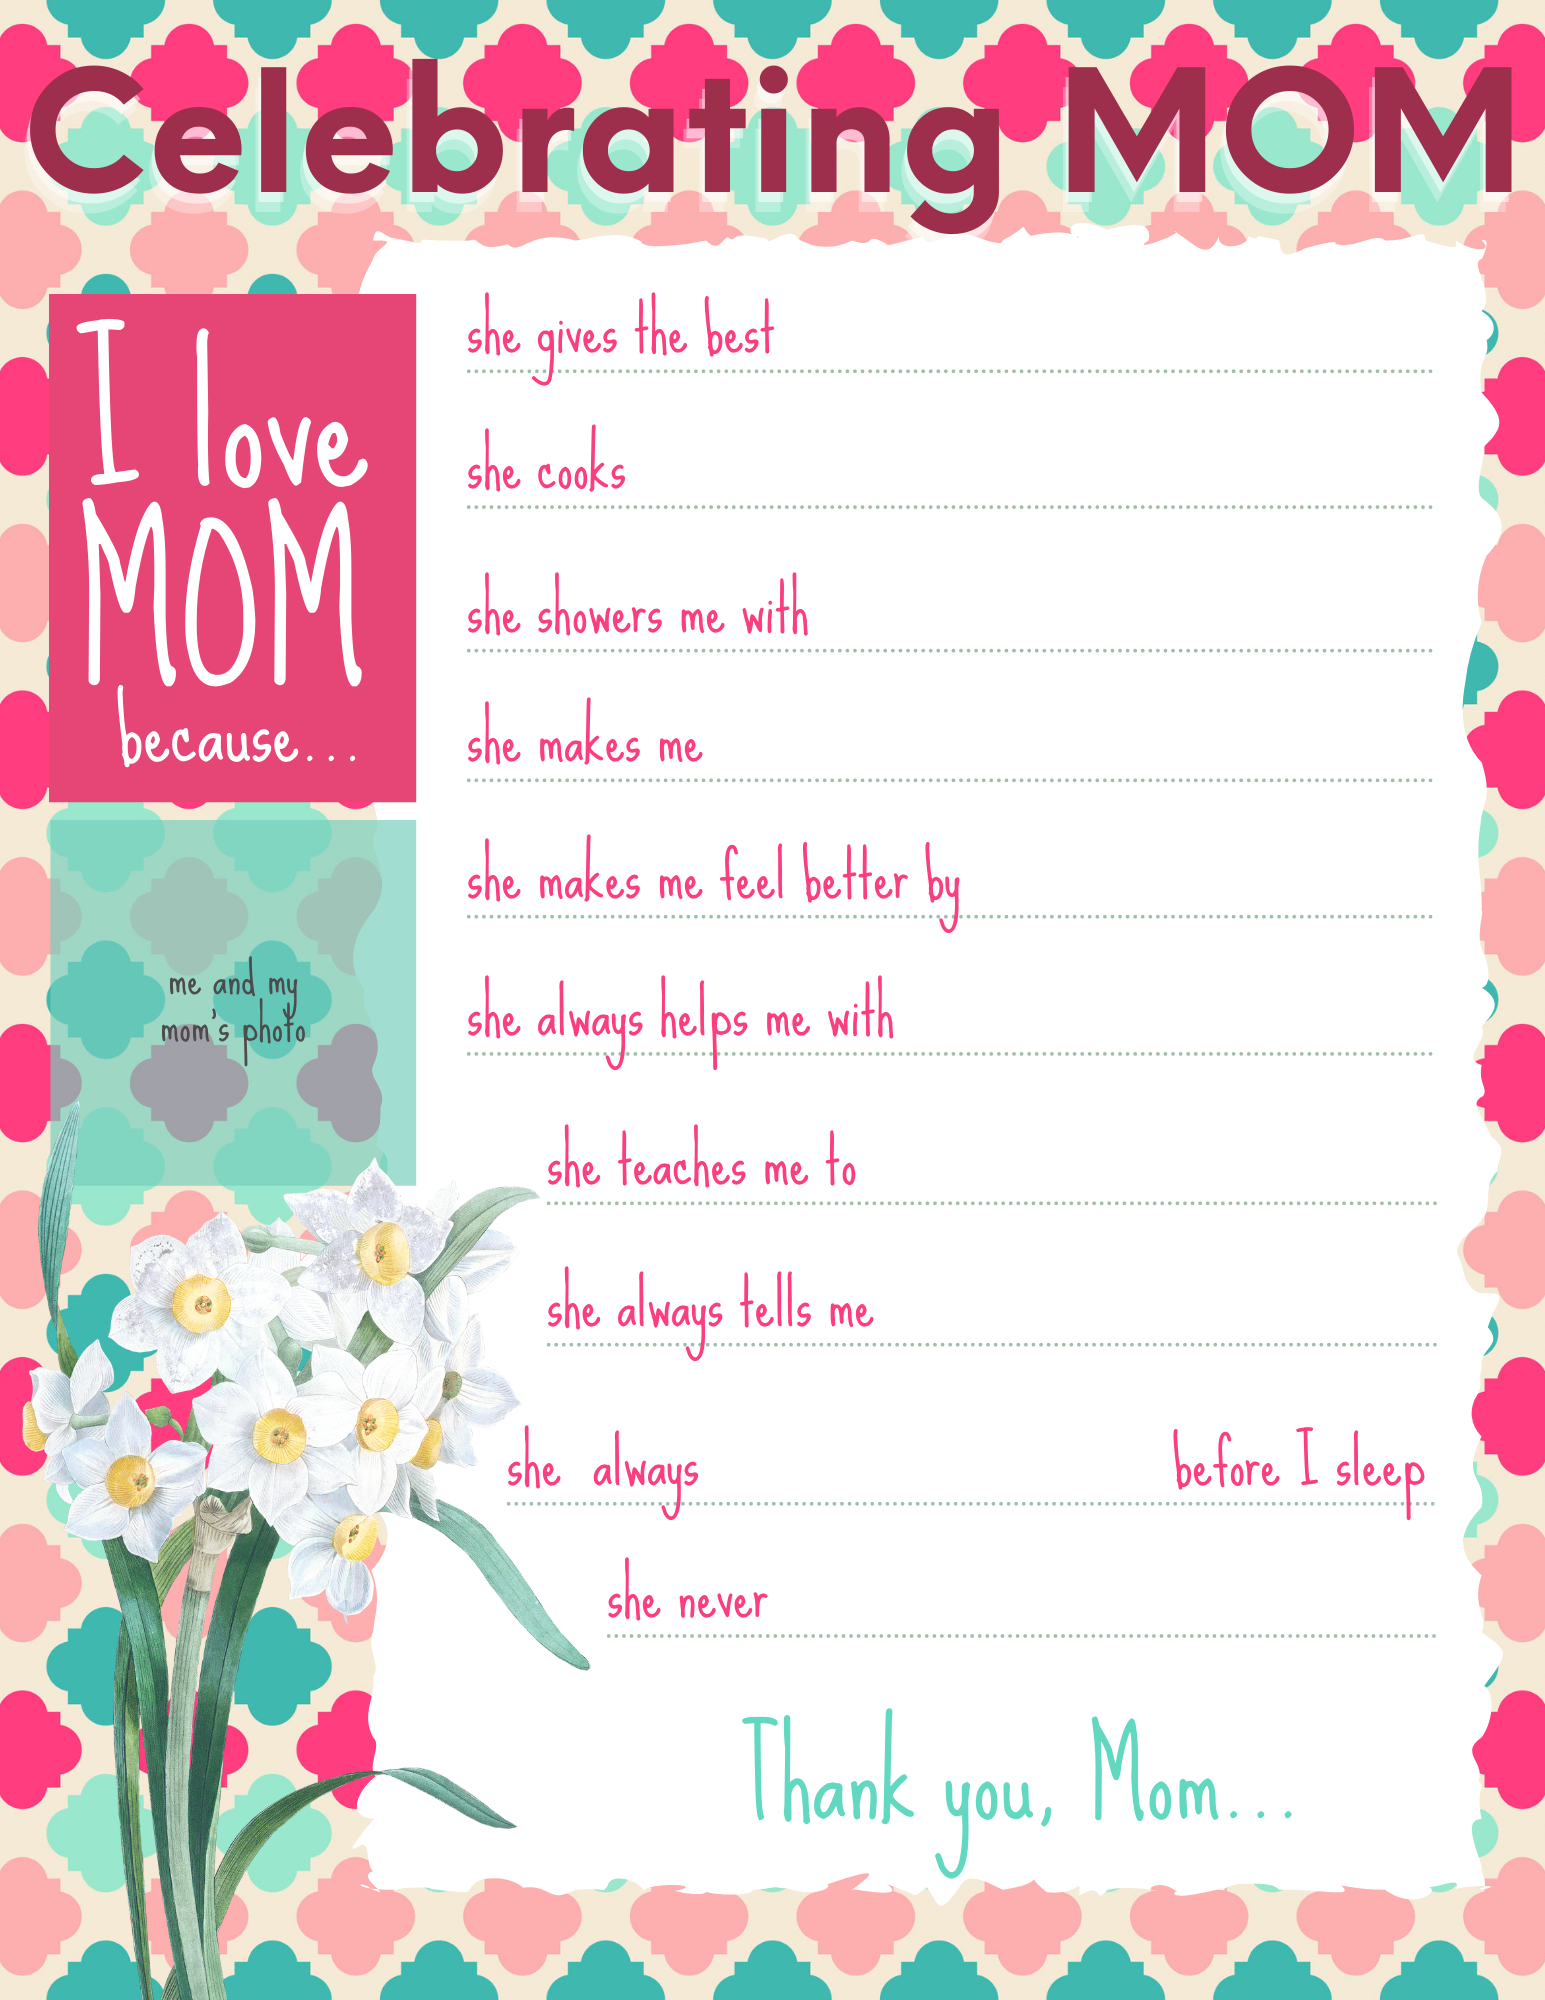 10 Reasons I Love My Mom printable  I love my dad, I love mom, Mom  printable